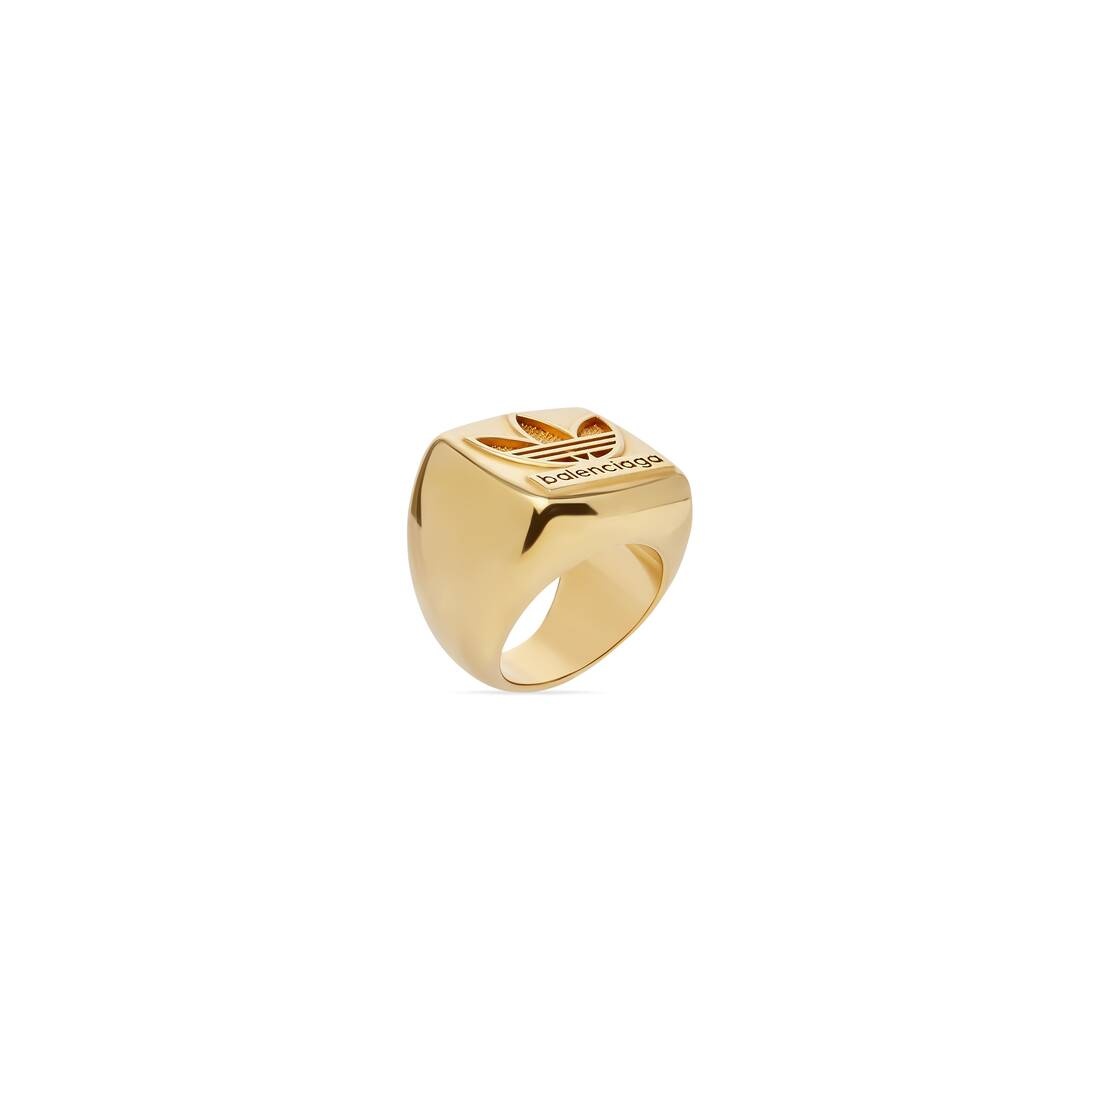 Balenciaga / Adidas Trefoil Signet Ring  in Gold - 1